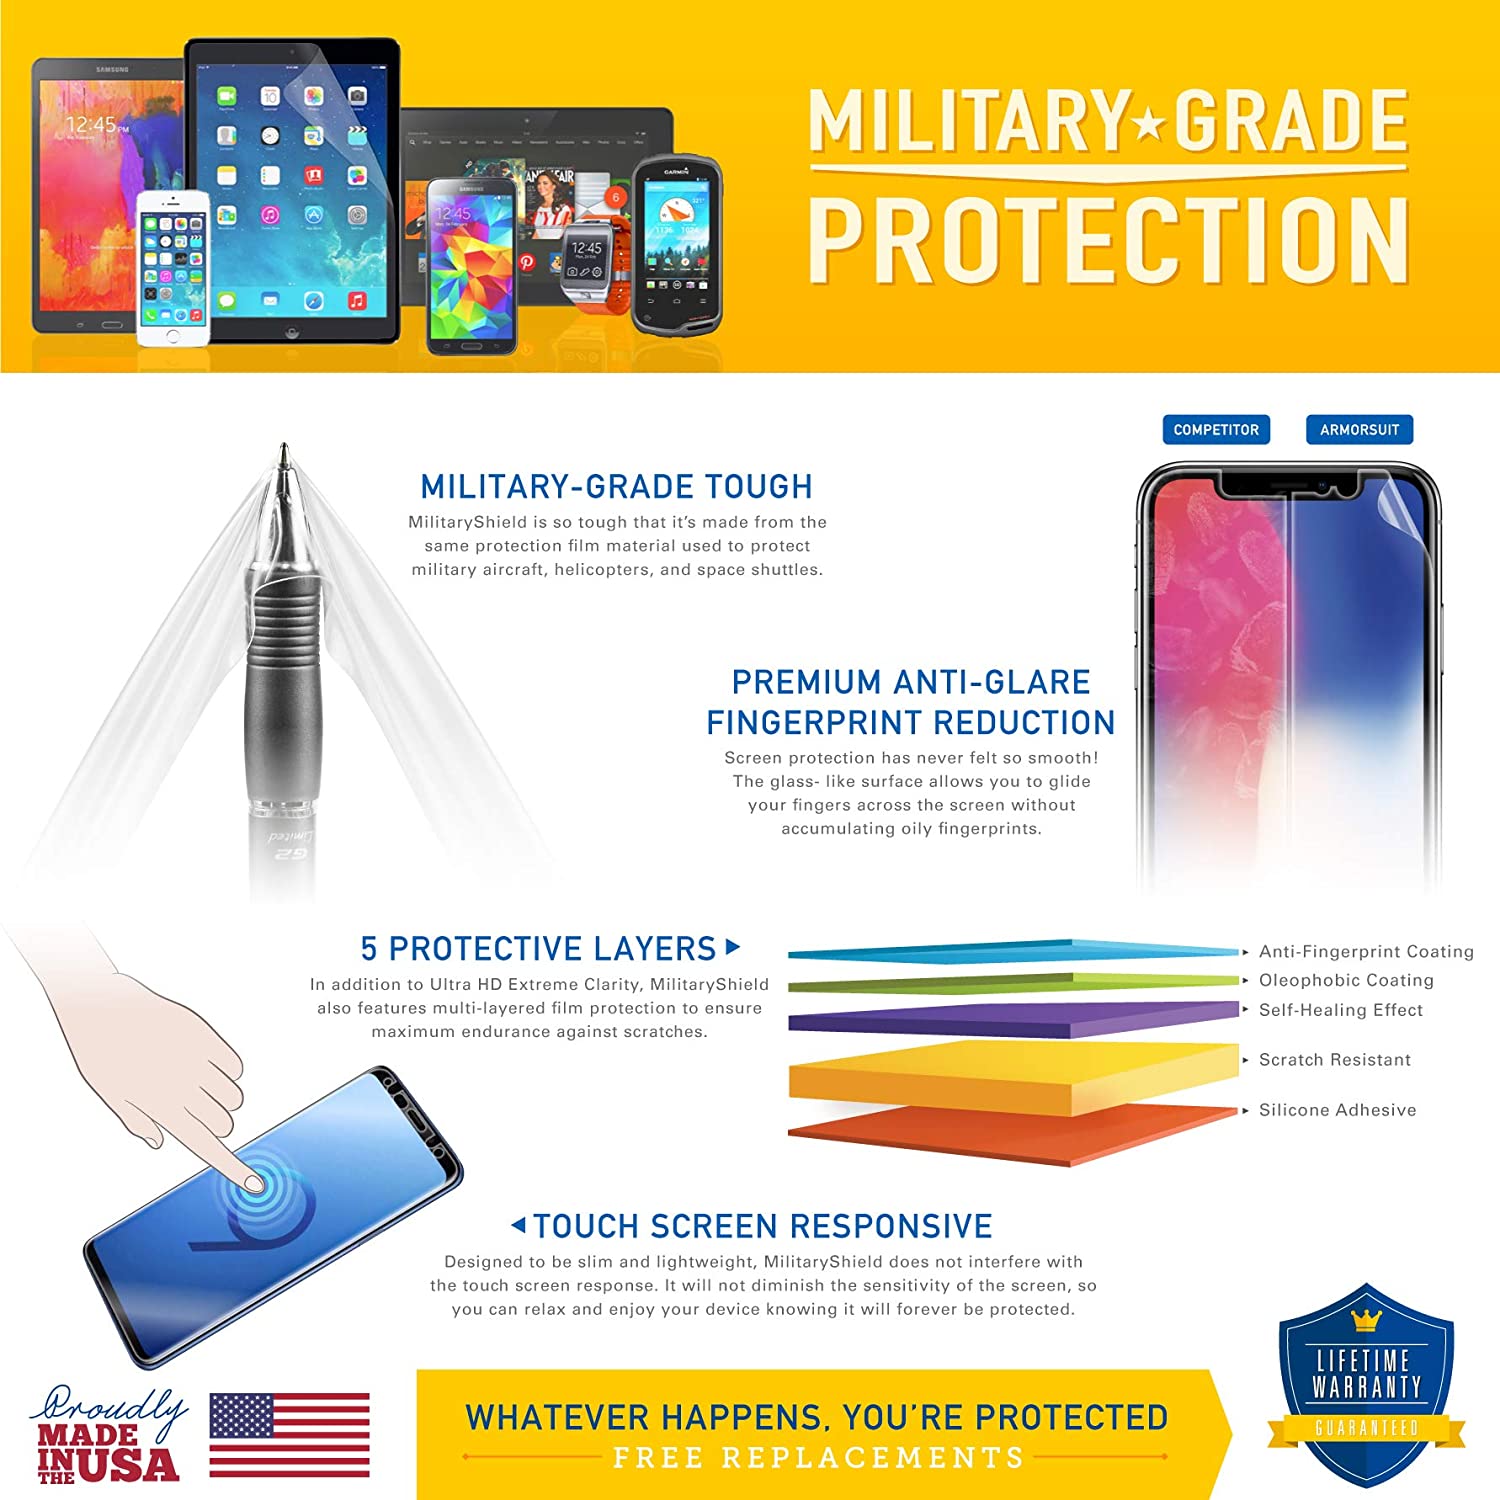 Samsung Galaxy Note 3 Screen Protector + Carbon Fiber Skin Protector